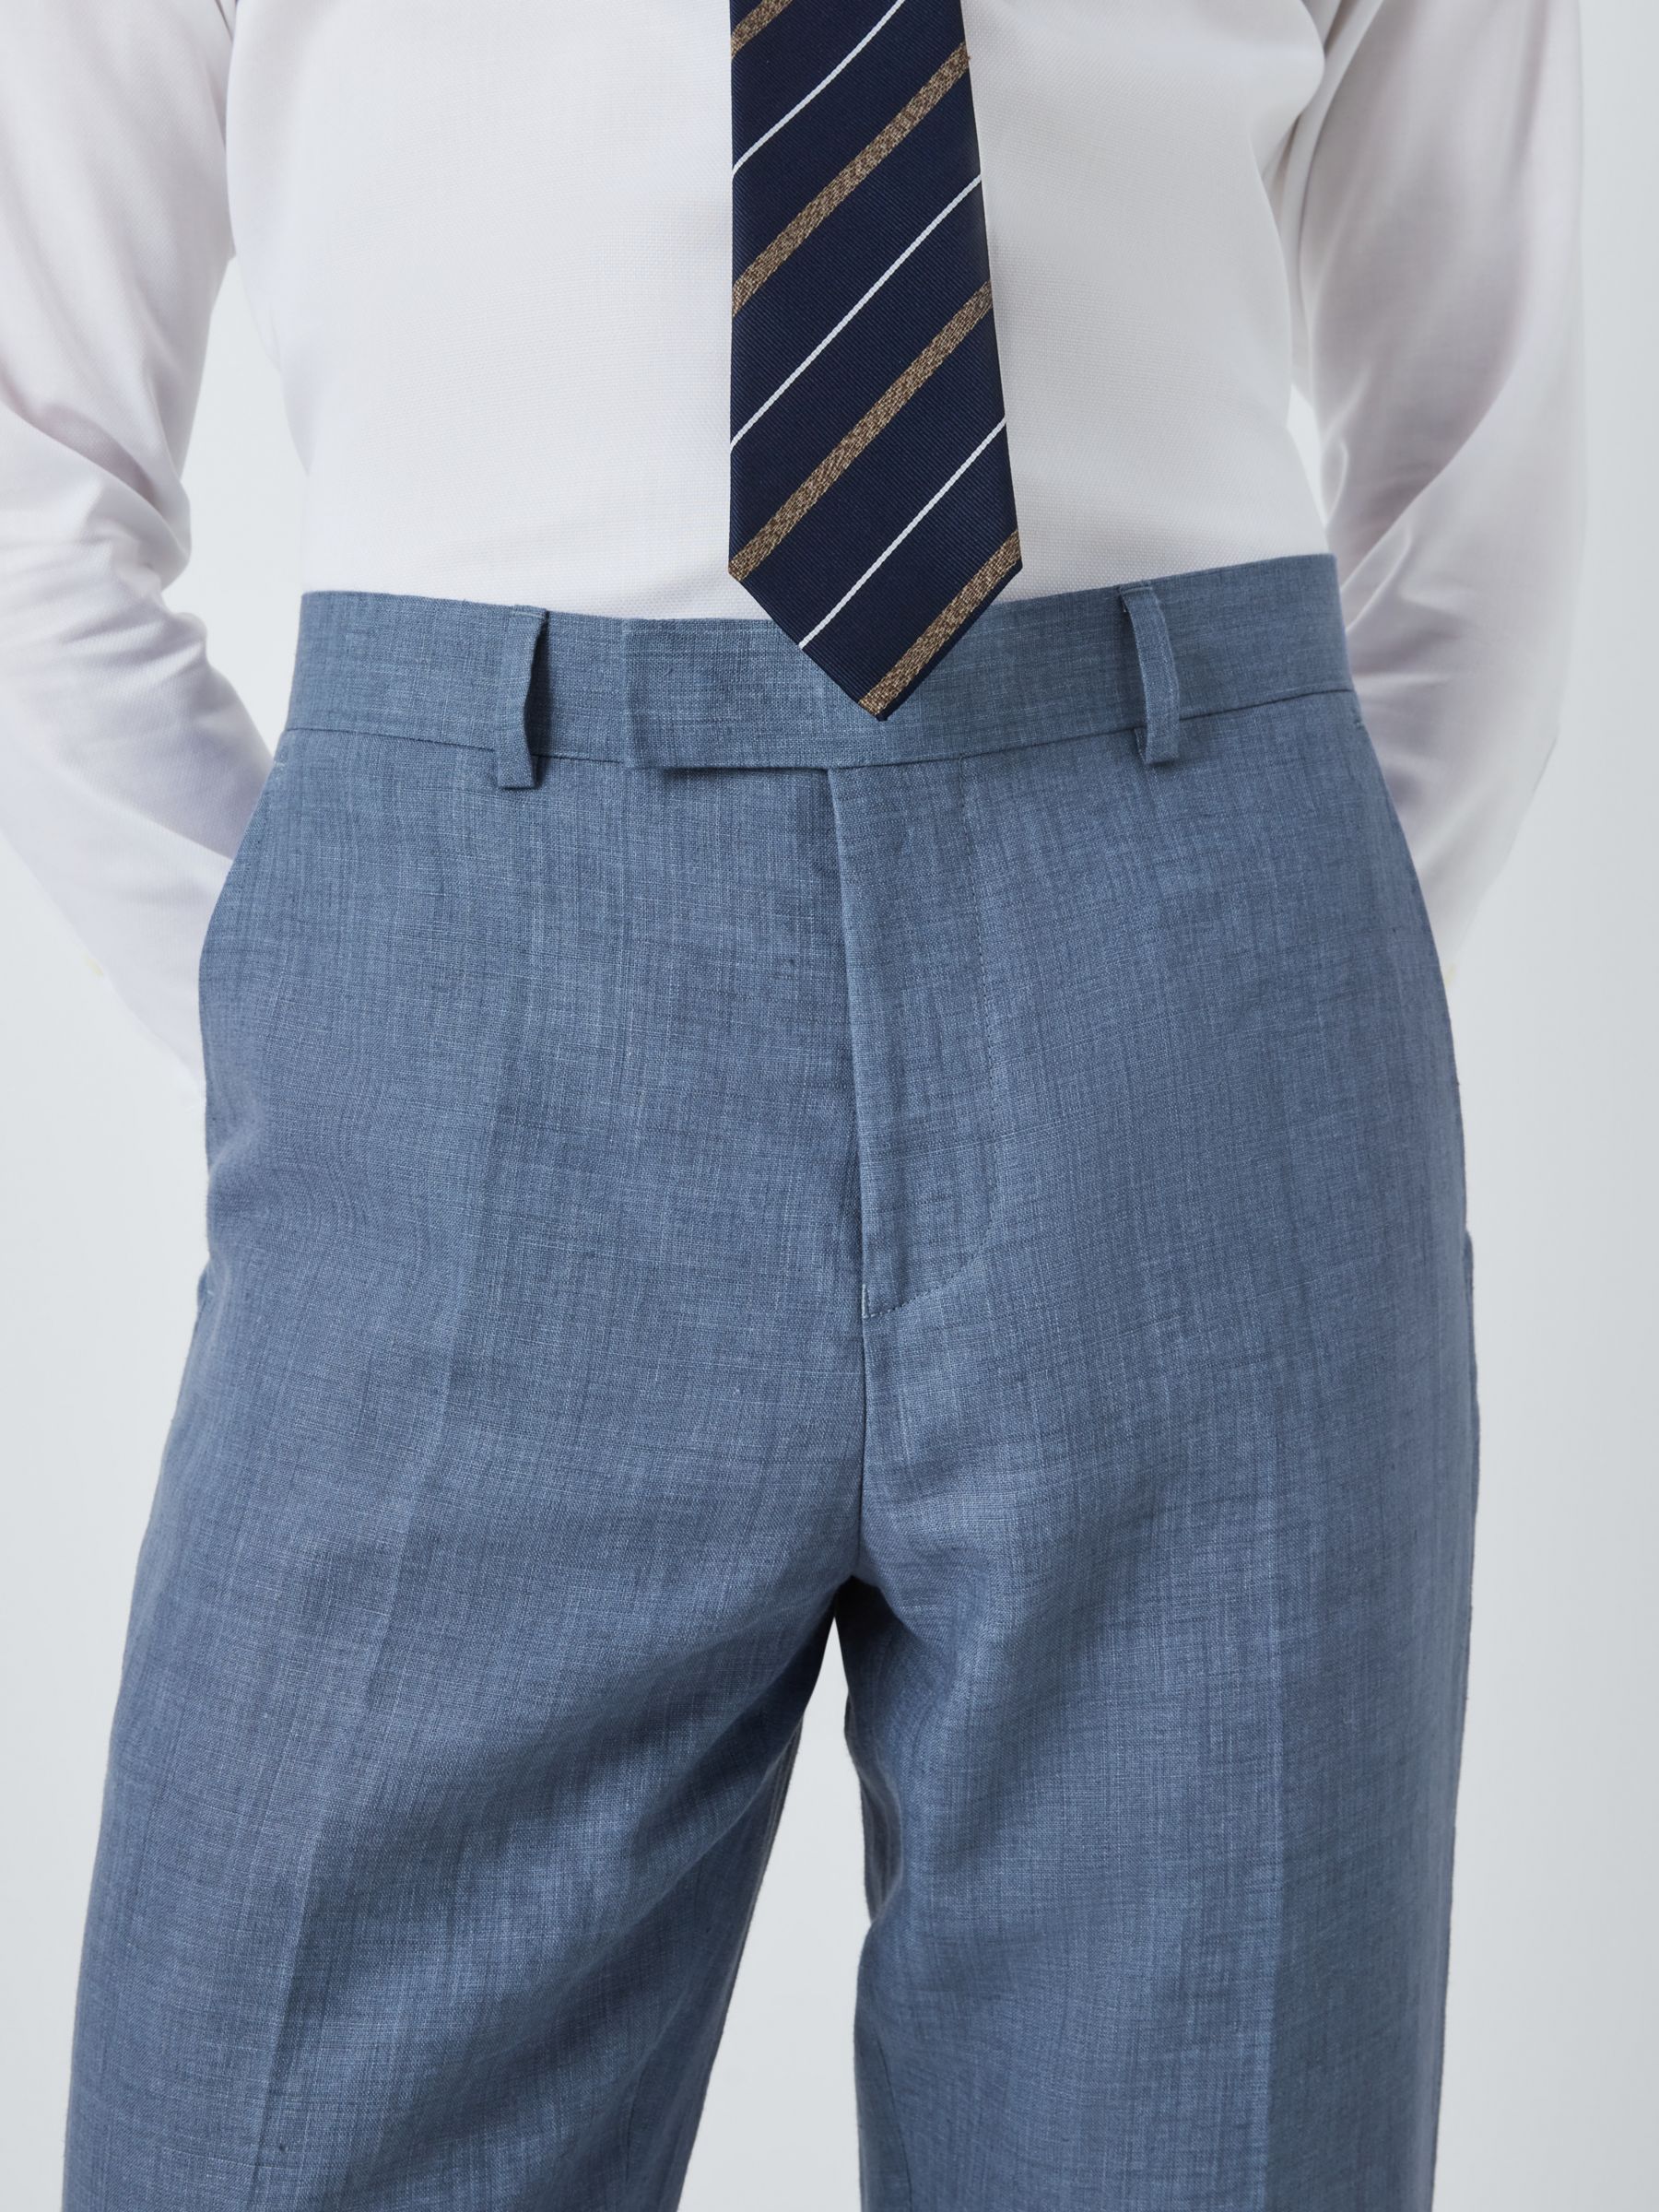 John Lewis Cambridge Linen Regular Fit Trousers, Mid Blue, 30R